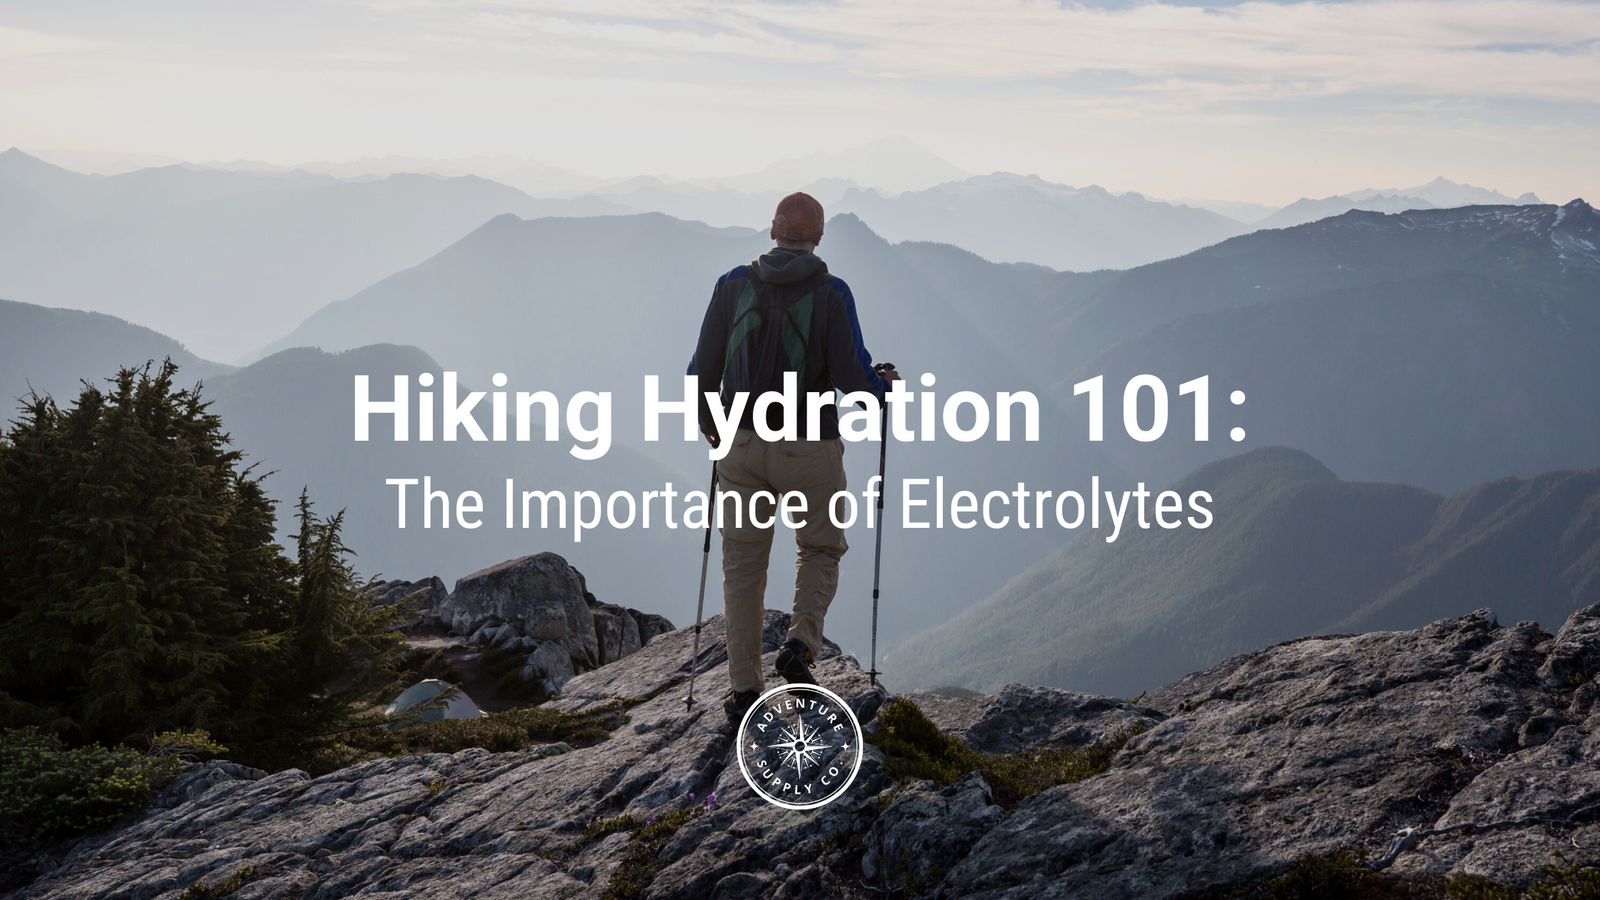 Hiking Hydration 101: The Importance of Electrolytes